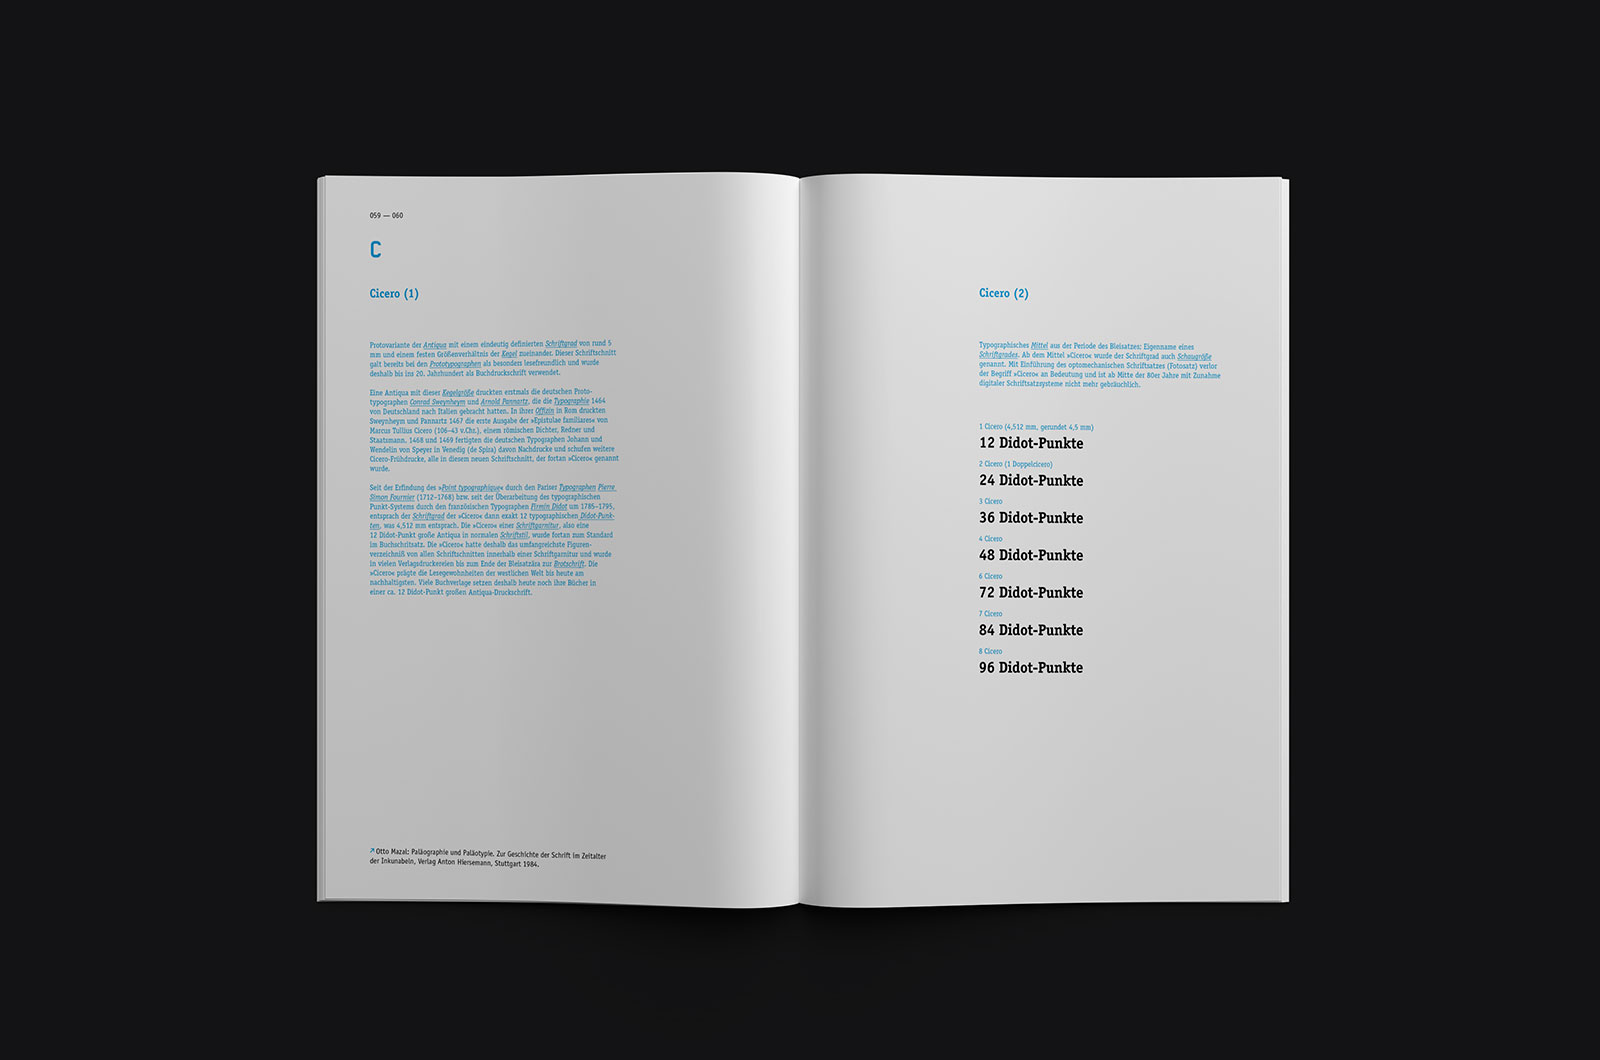 Alexander Glante - Works - Typografie Kompakt - 03